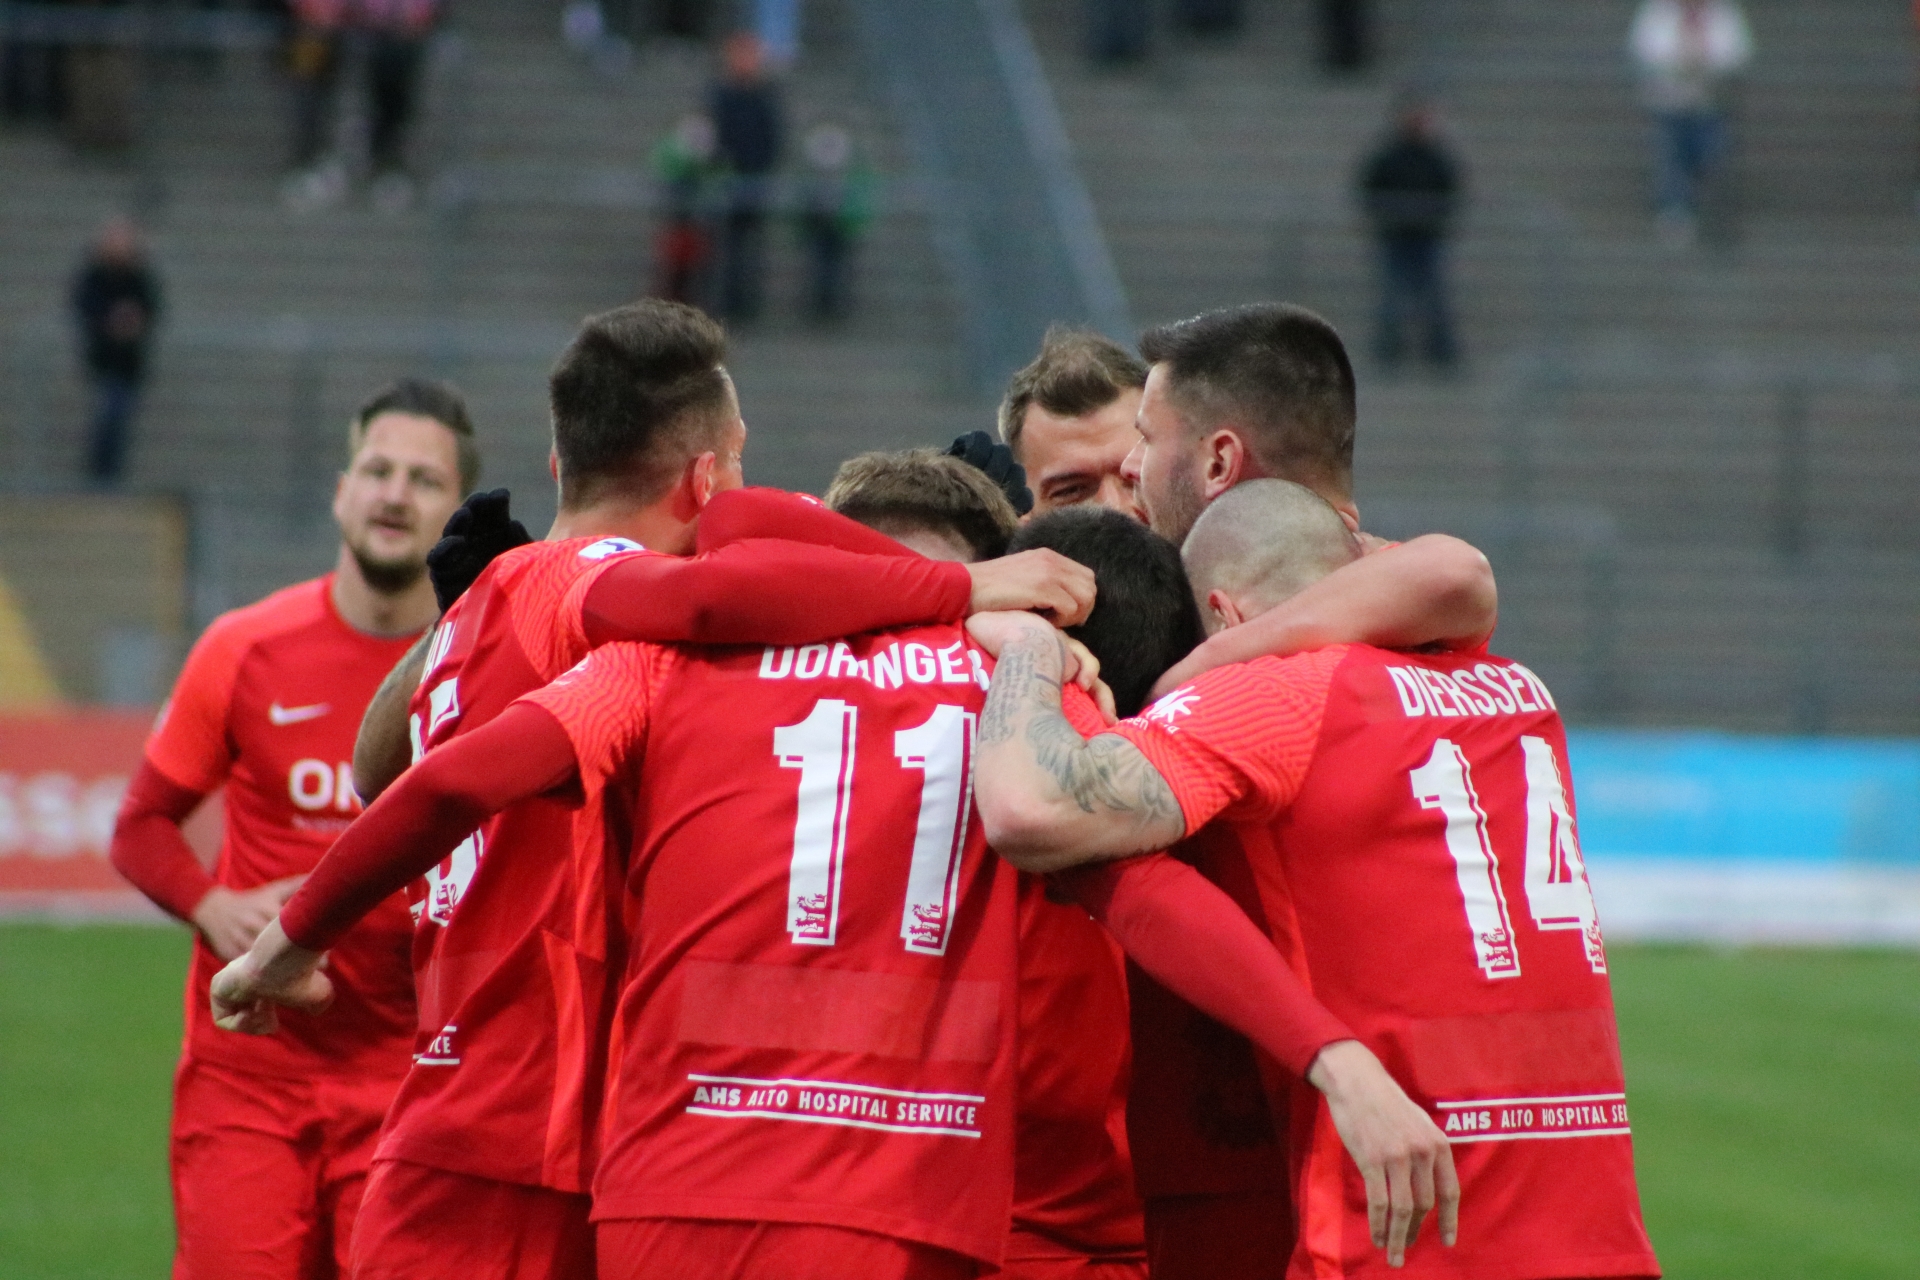 KSV Hessen Kassel - FSV Mainz 05 U23